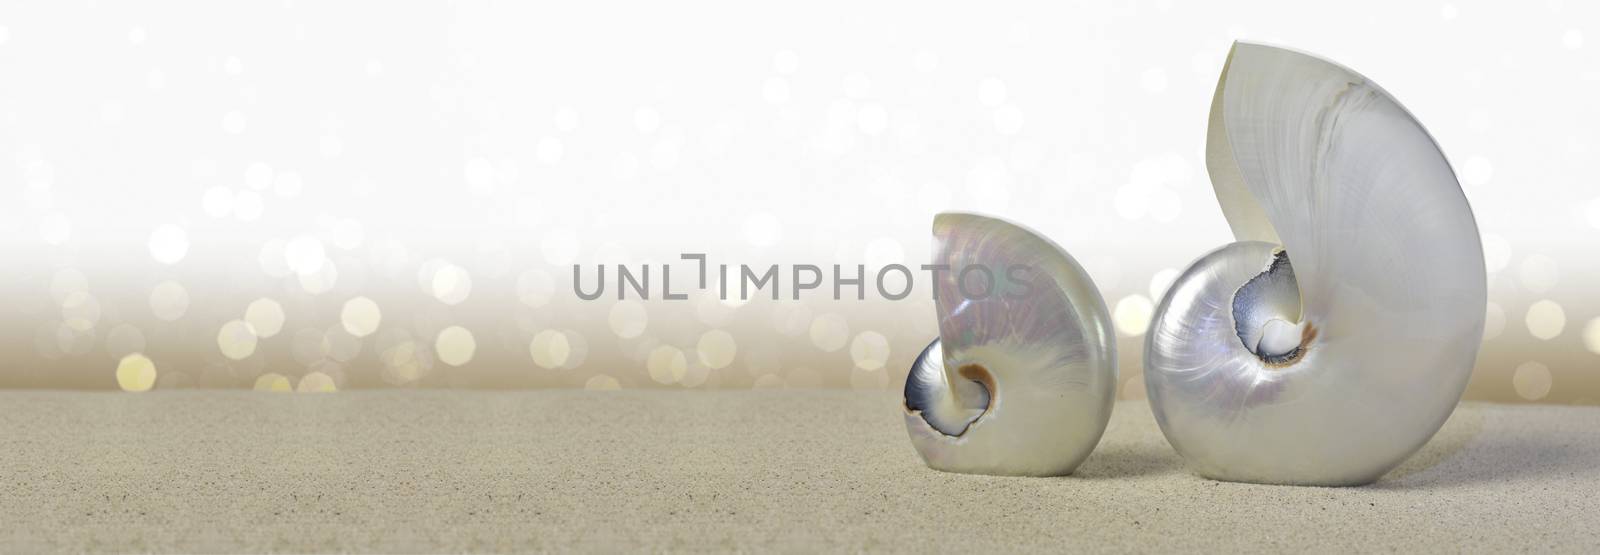 Nautilus shells by stellar